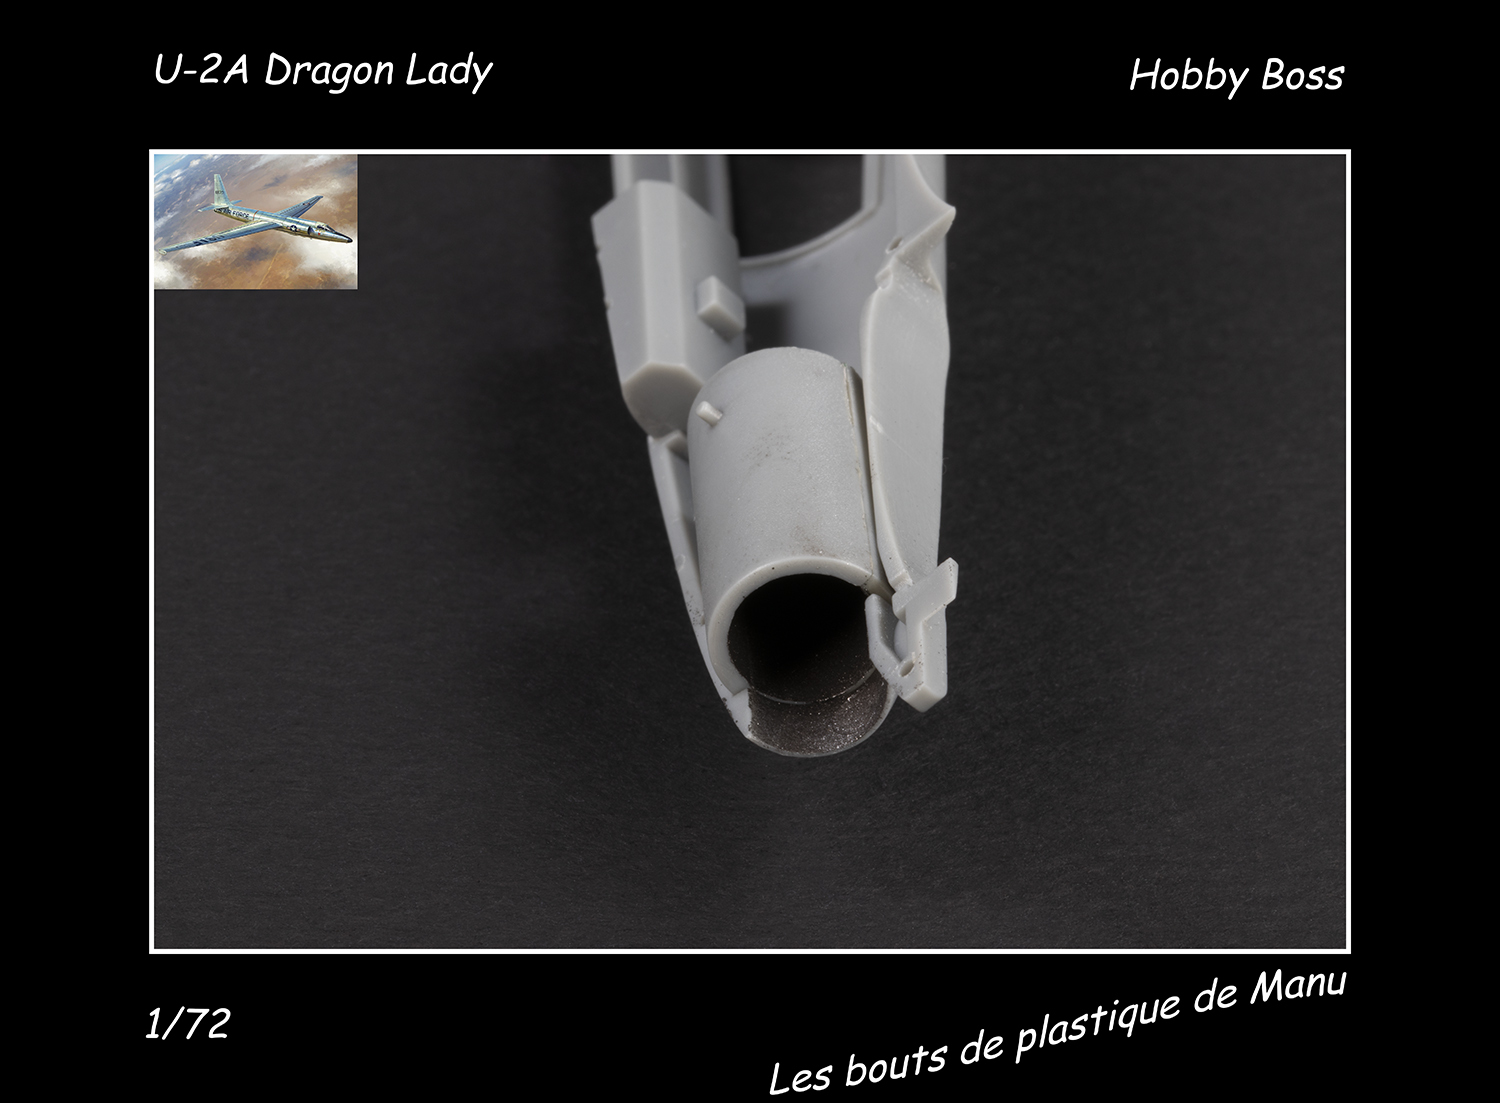 [Hobby Boss] U-2A Dragon Lady - Greffe sans rejet Hz4k